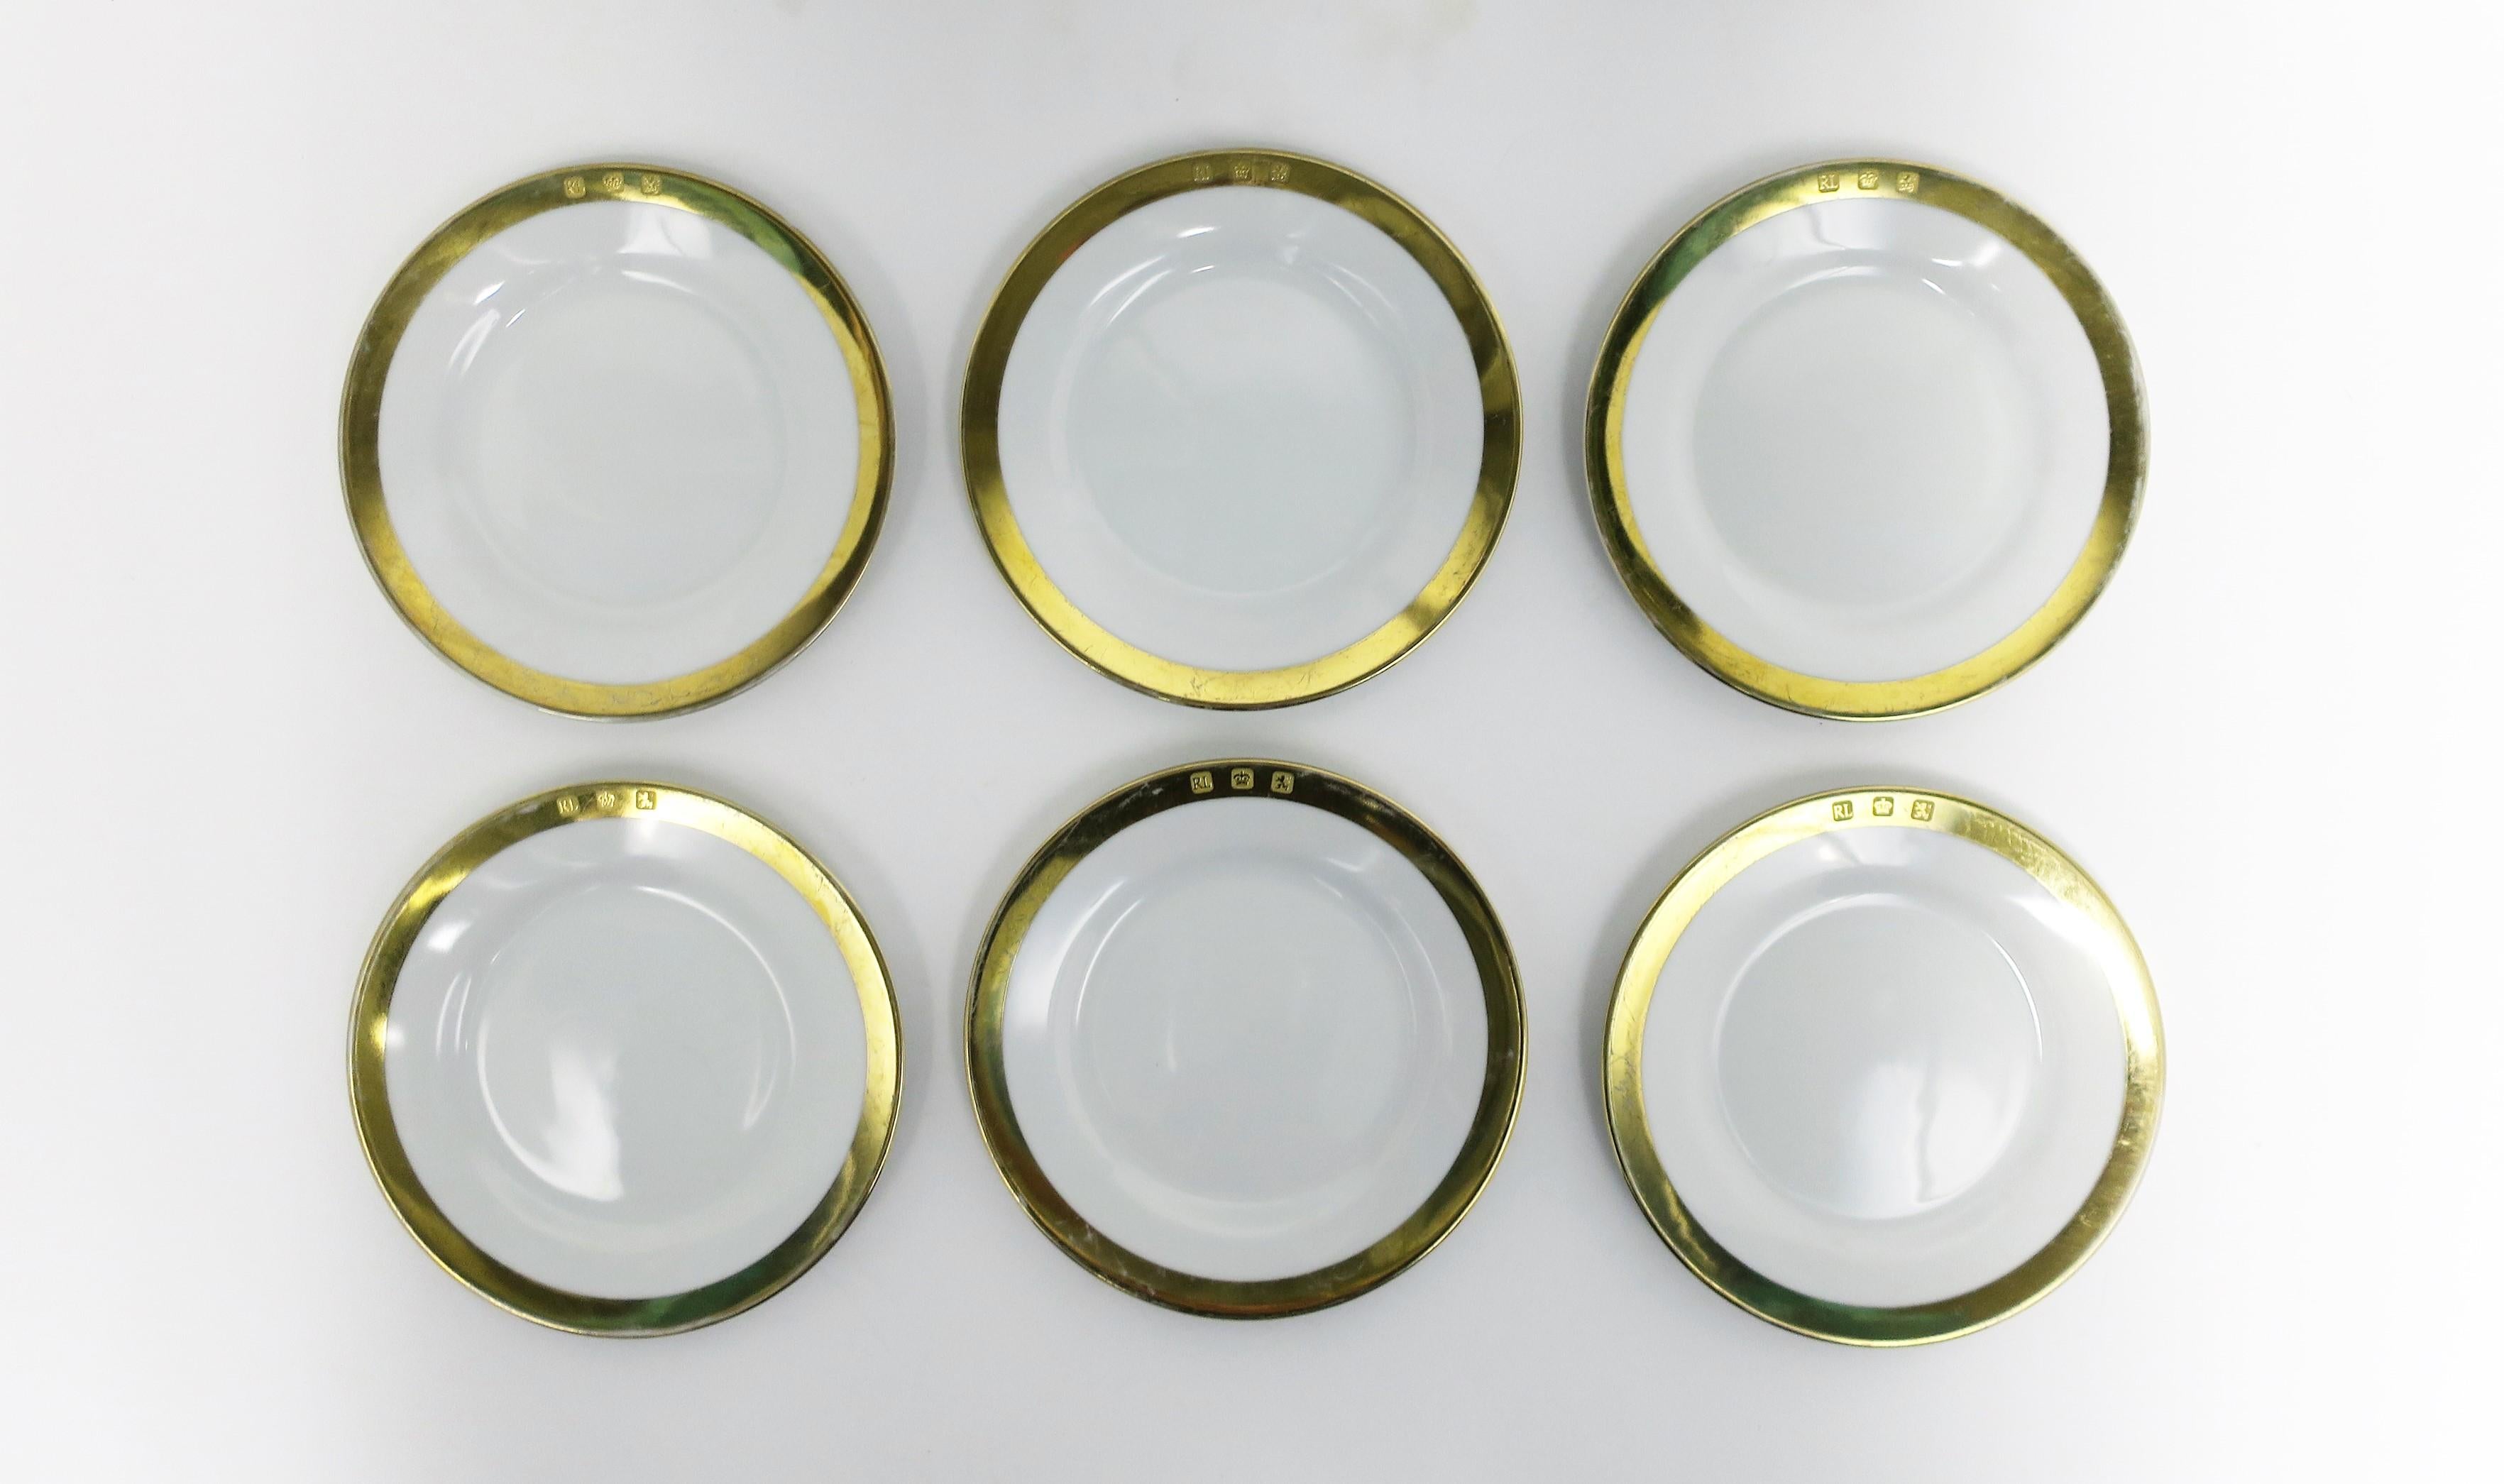 Glazed Ralph Lauren Appetizer Plates White and Gold Porcelain, 1990s